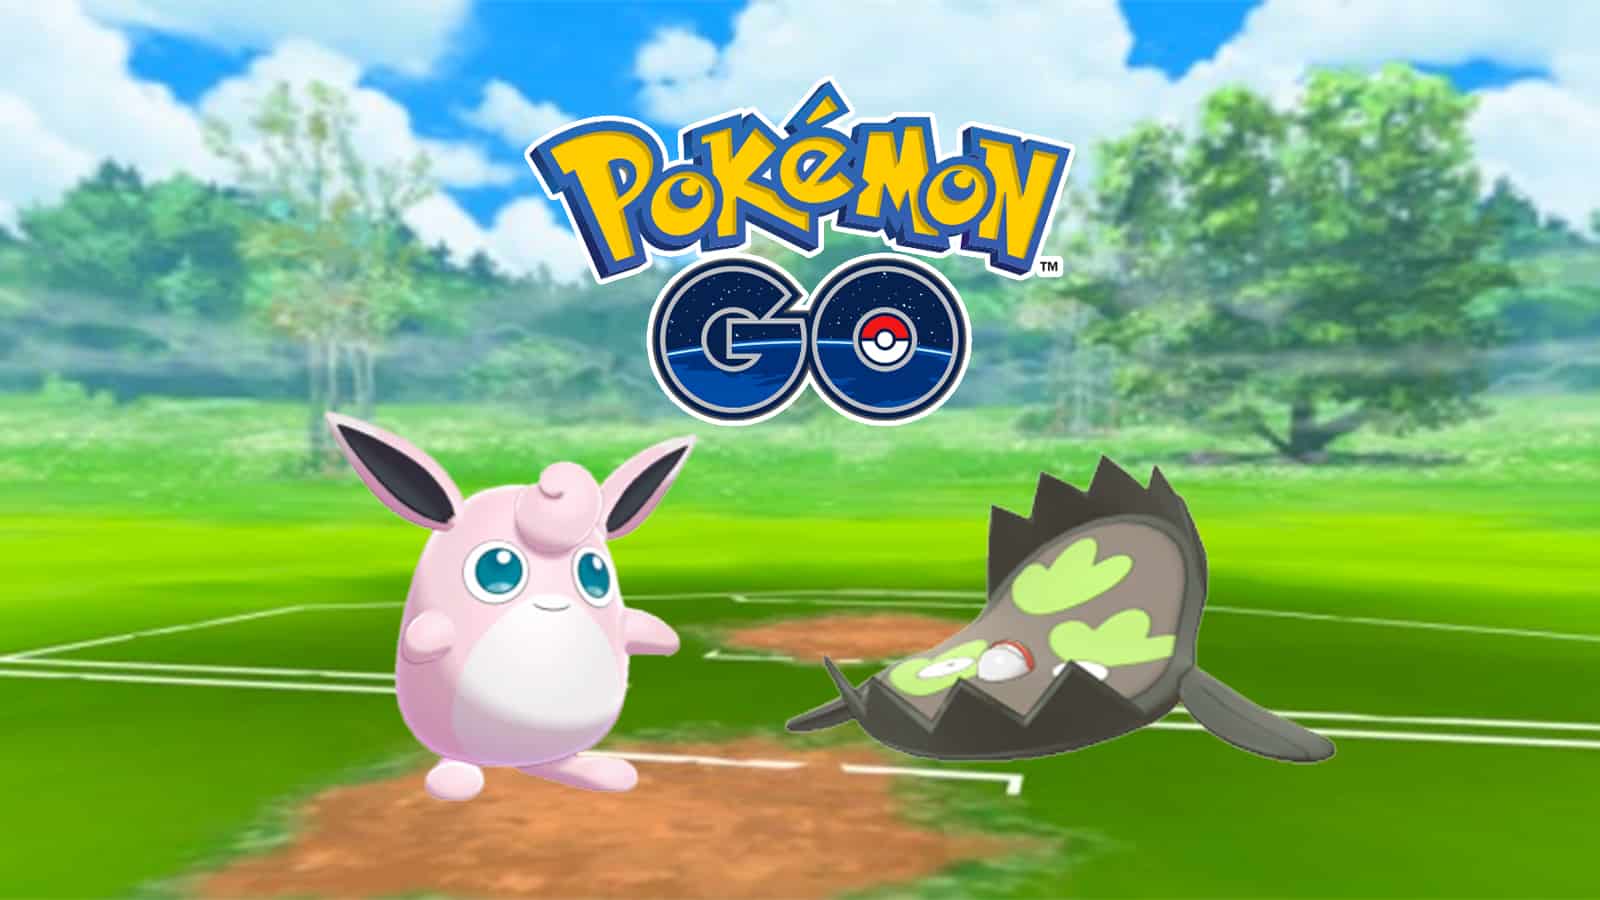 Pokémon Go Onix Evolution, Locations, Nests, Moveset - PokéGo